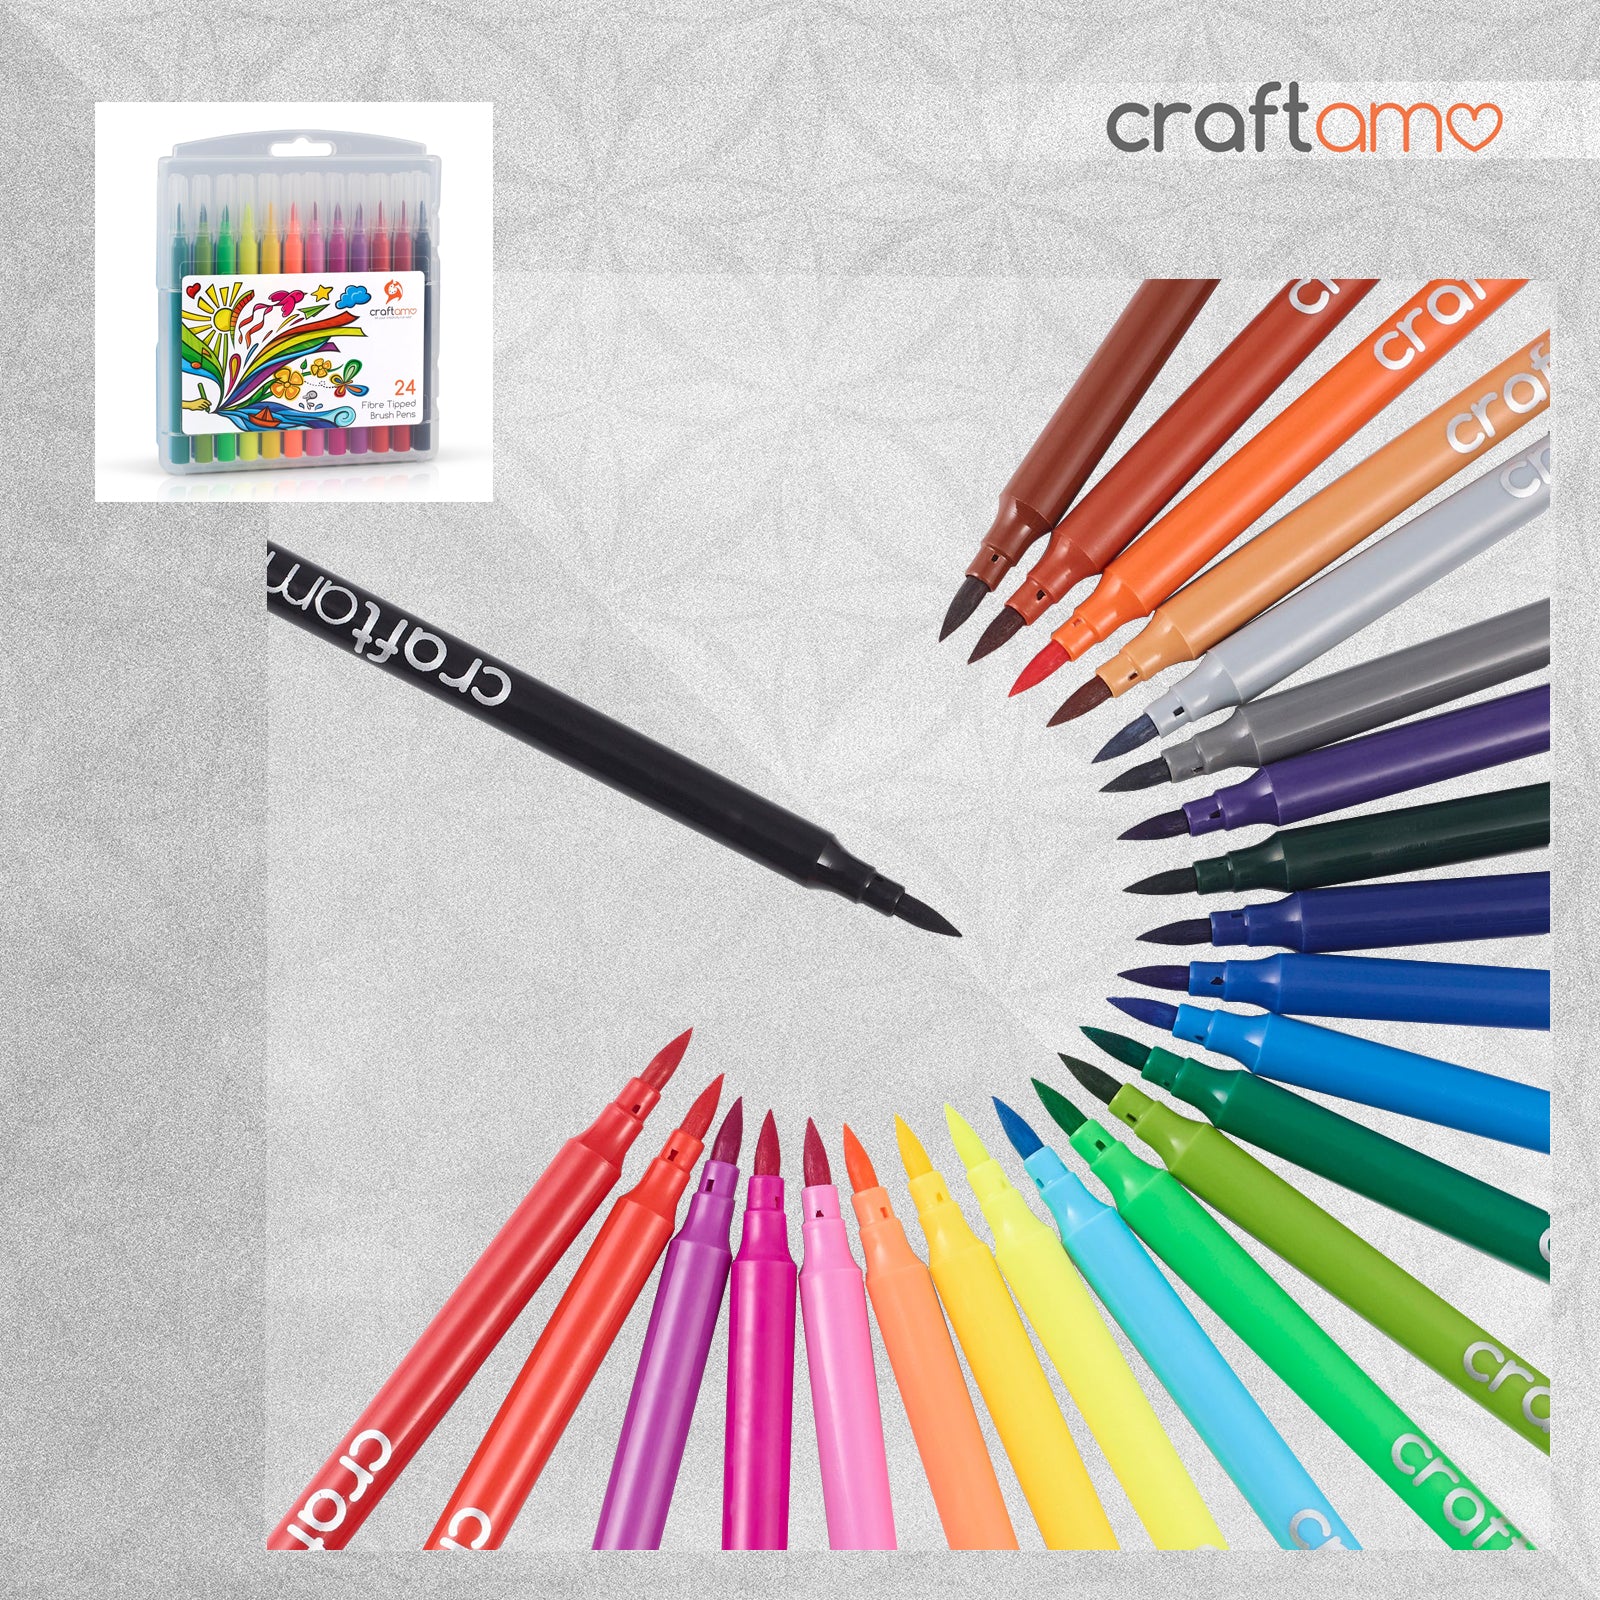 Craftamo Watercolour Brush Pens - Pack of 24